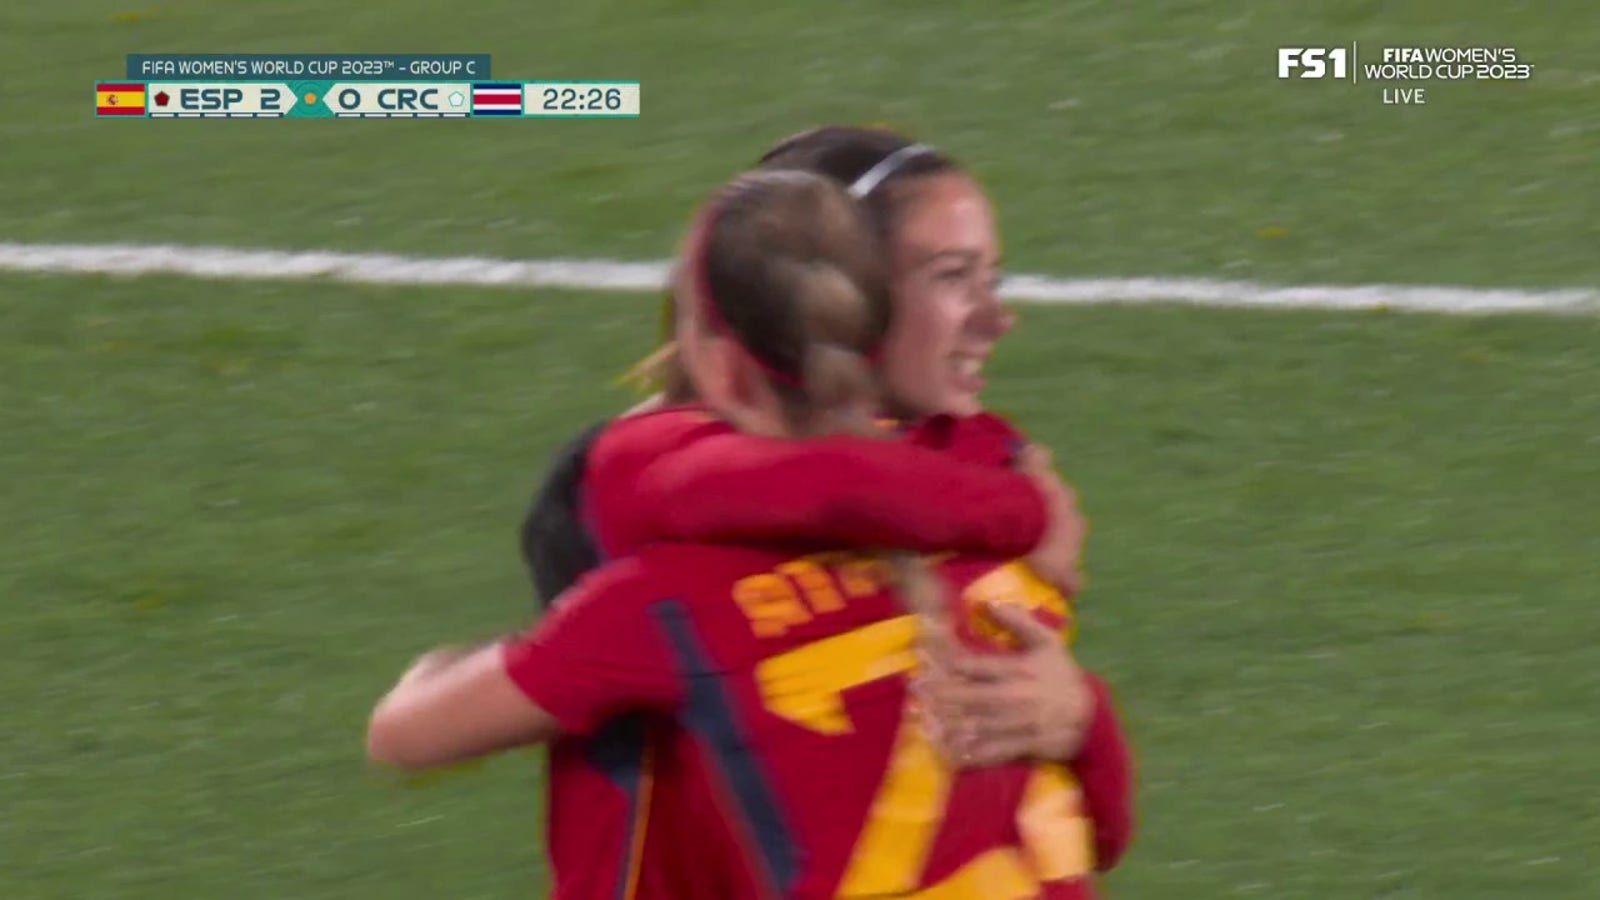 Spain's Aitana Bonmati Conca scores goal vs. Costa Rica in 23'